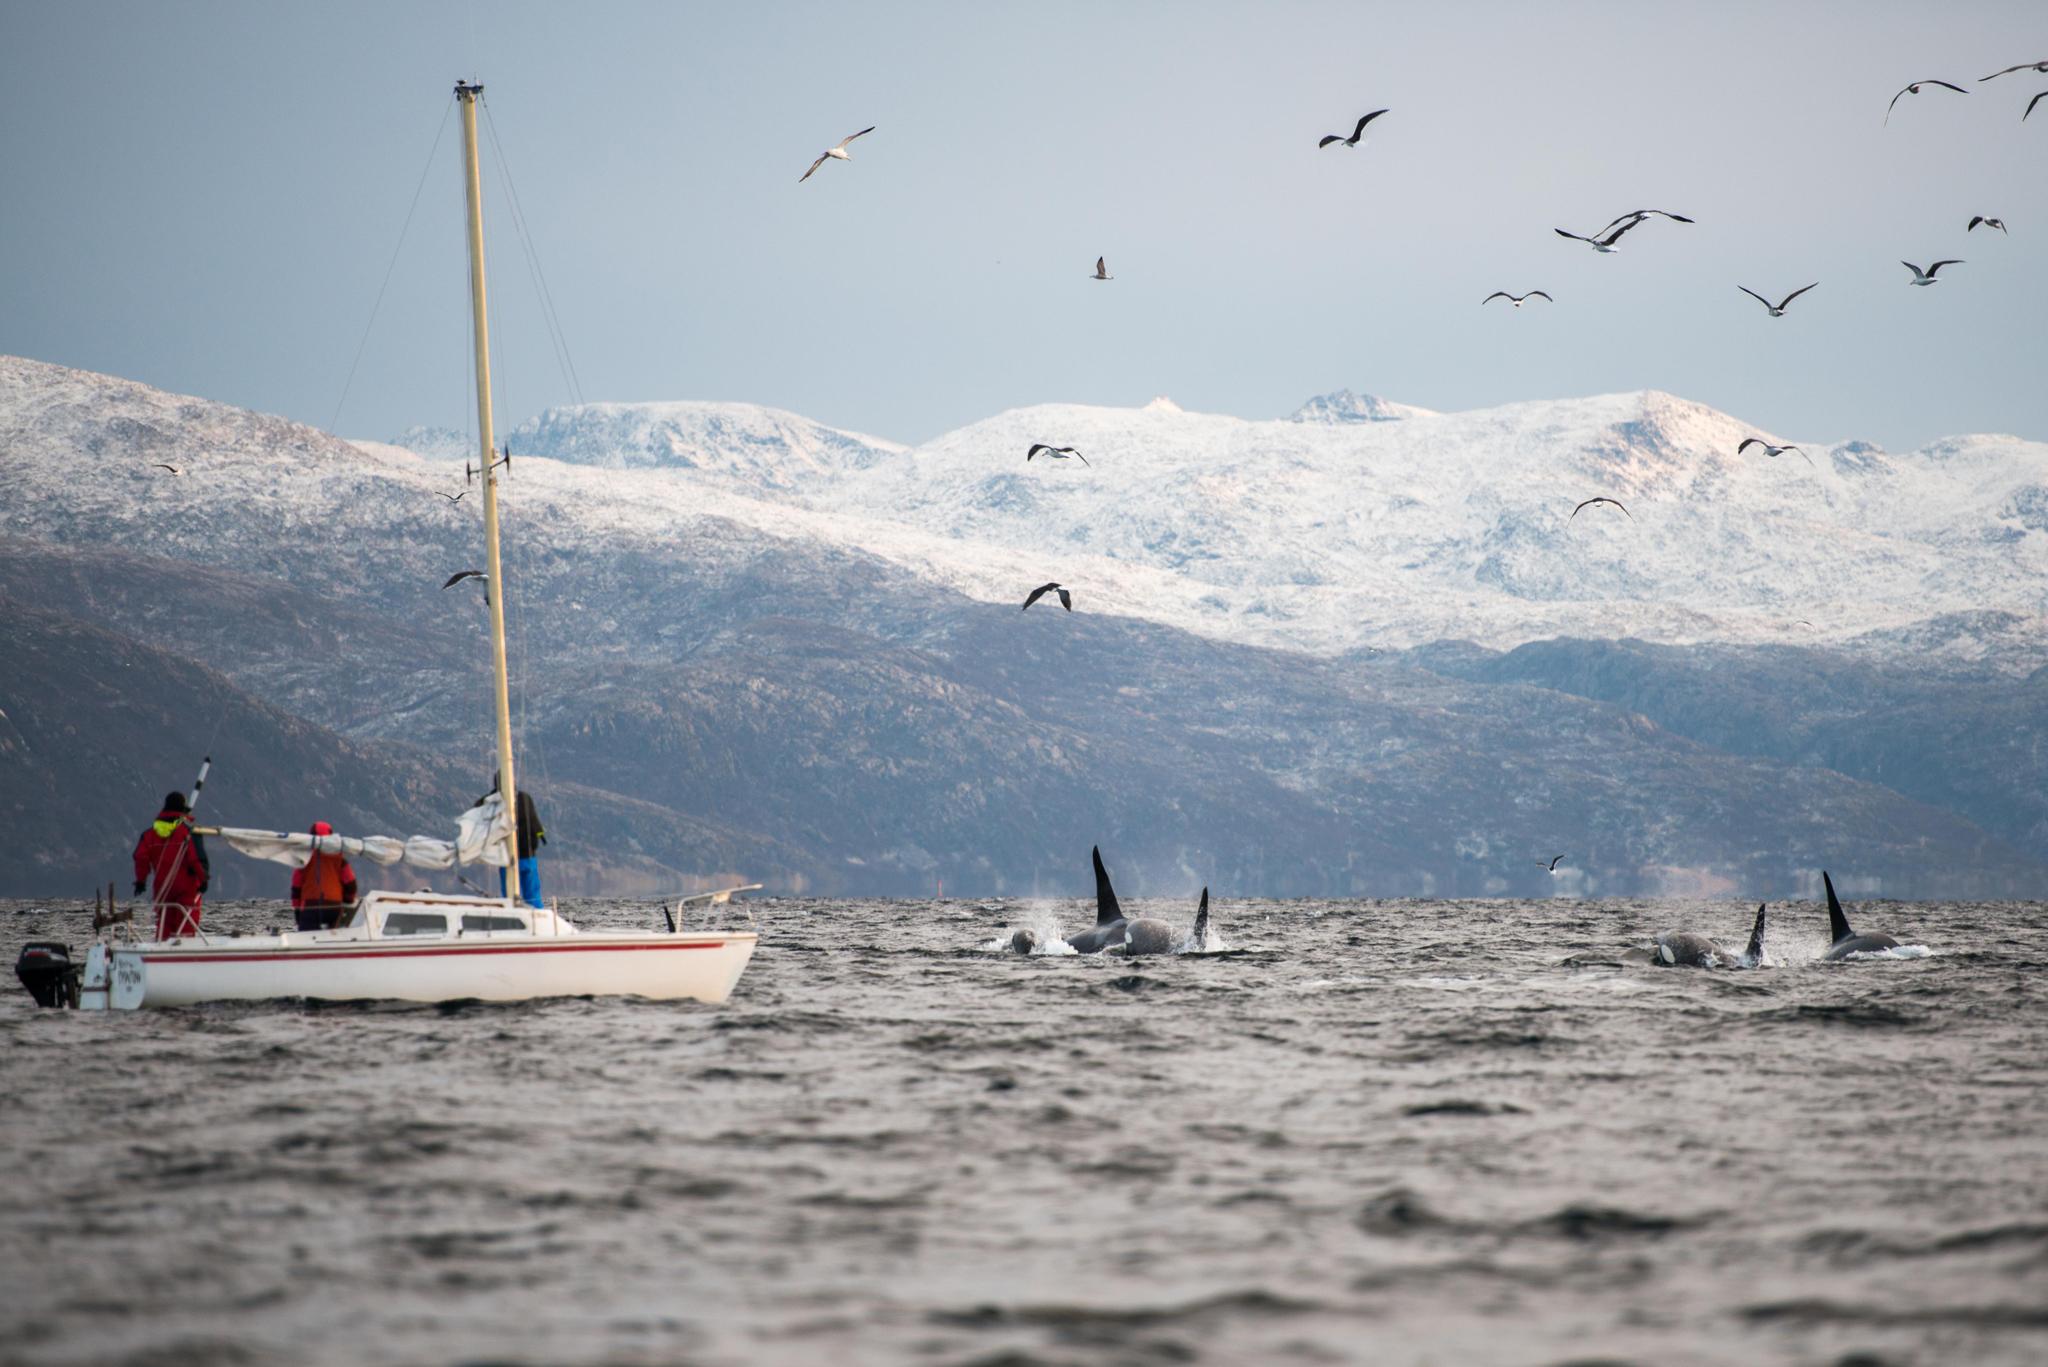 The orcas make a splash